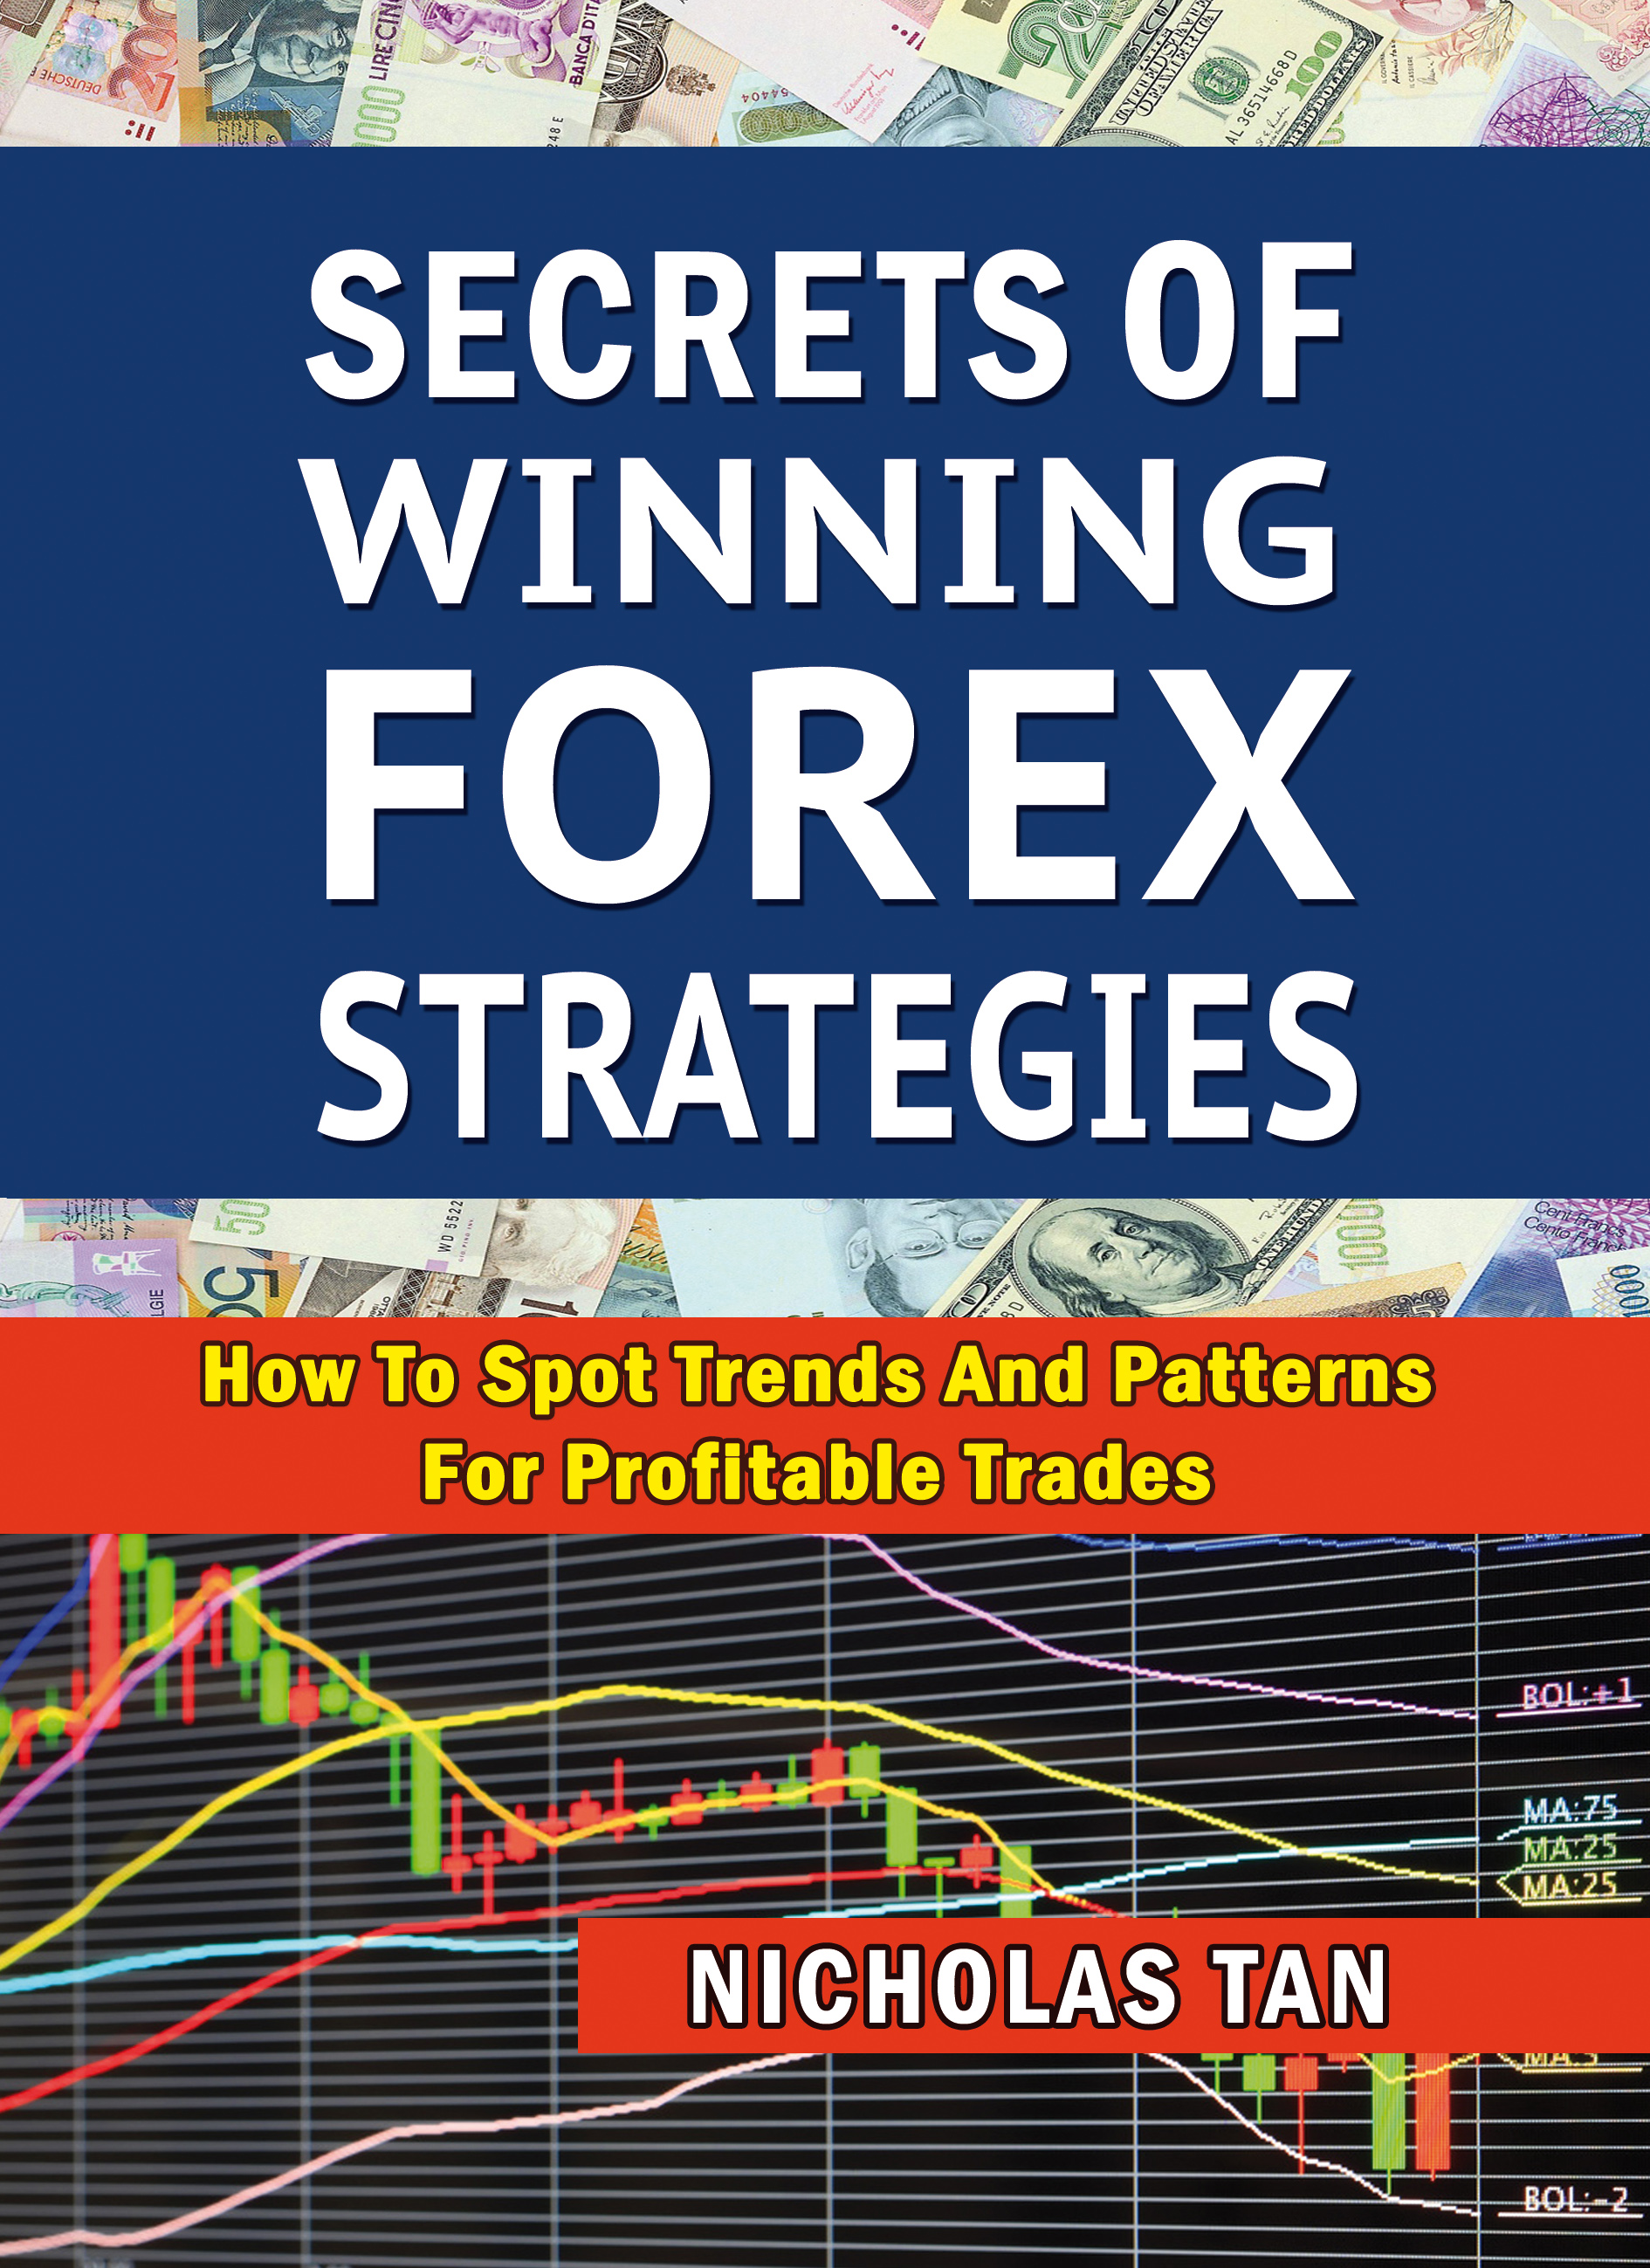 Secrets of Winning Forex Strategies by Nicholas Tan | eBooks - Scribd